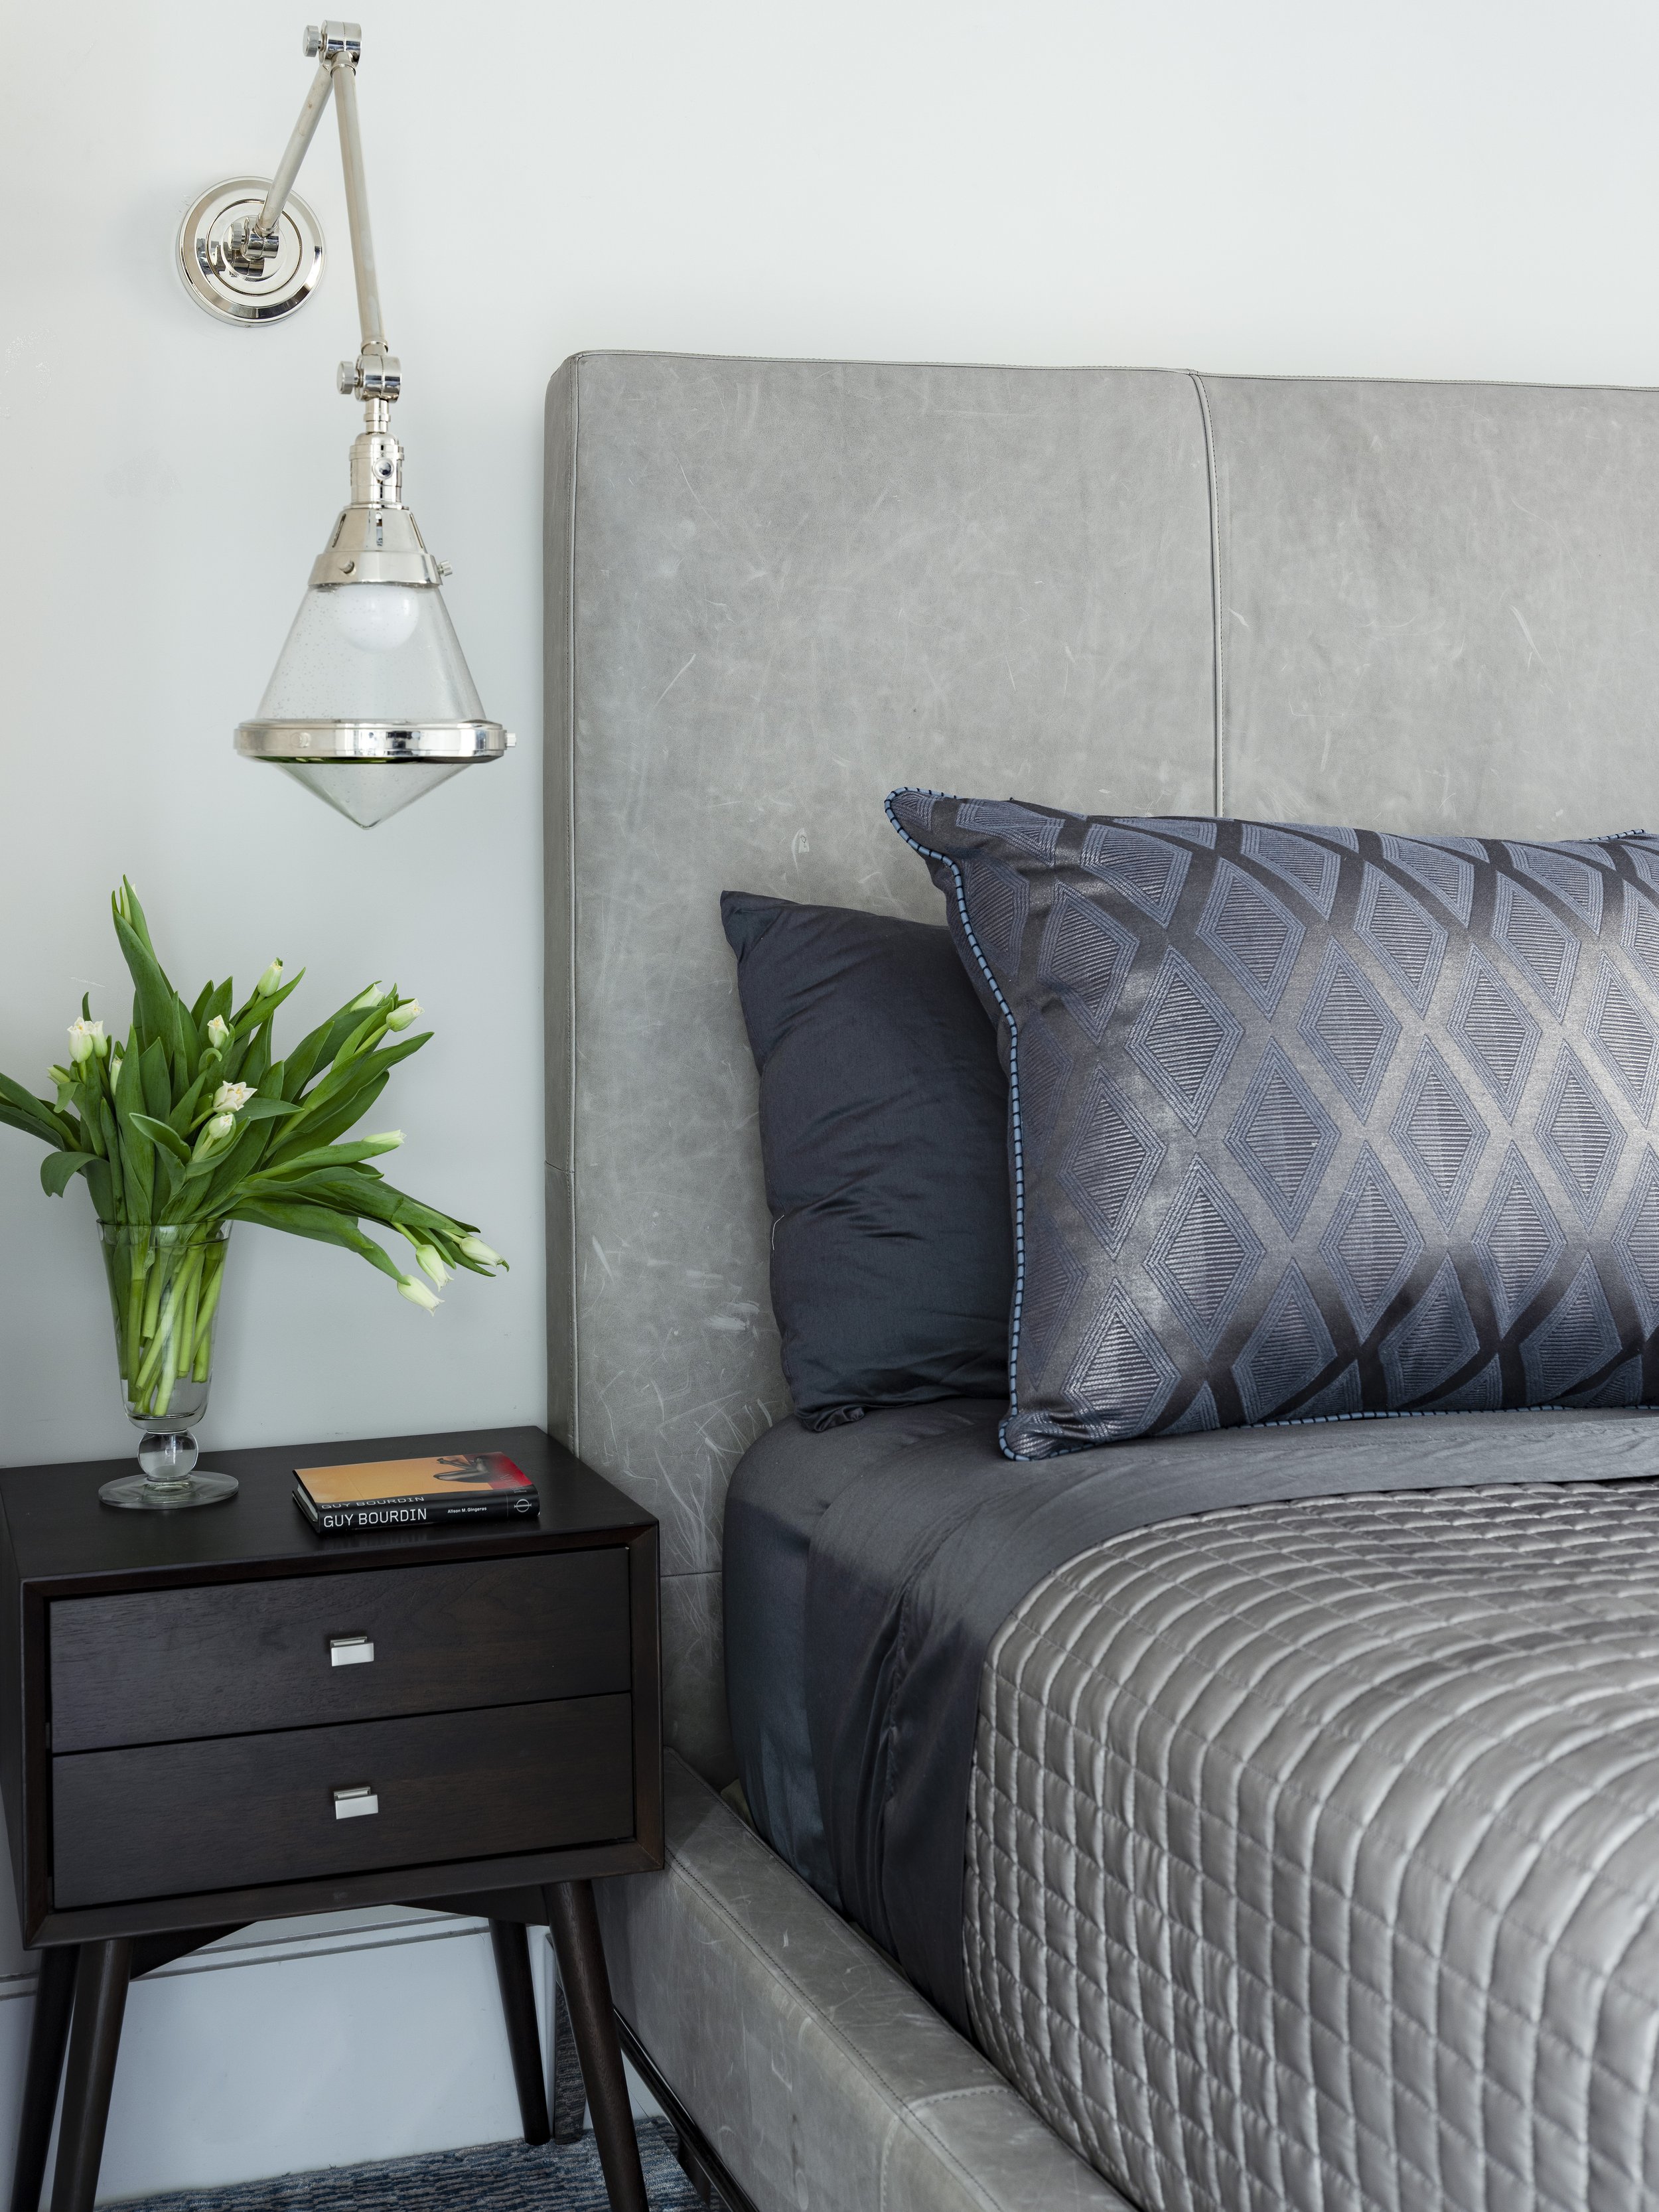 22-side-table-modern-aesthetic-blue-gray-textured-bedding-and-pillows-cool-side-light-manhattan-penthouse-rinfret-interior-designs..jpg